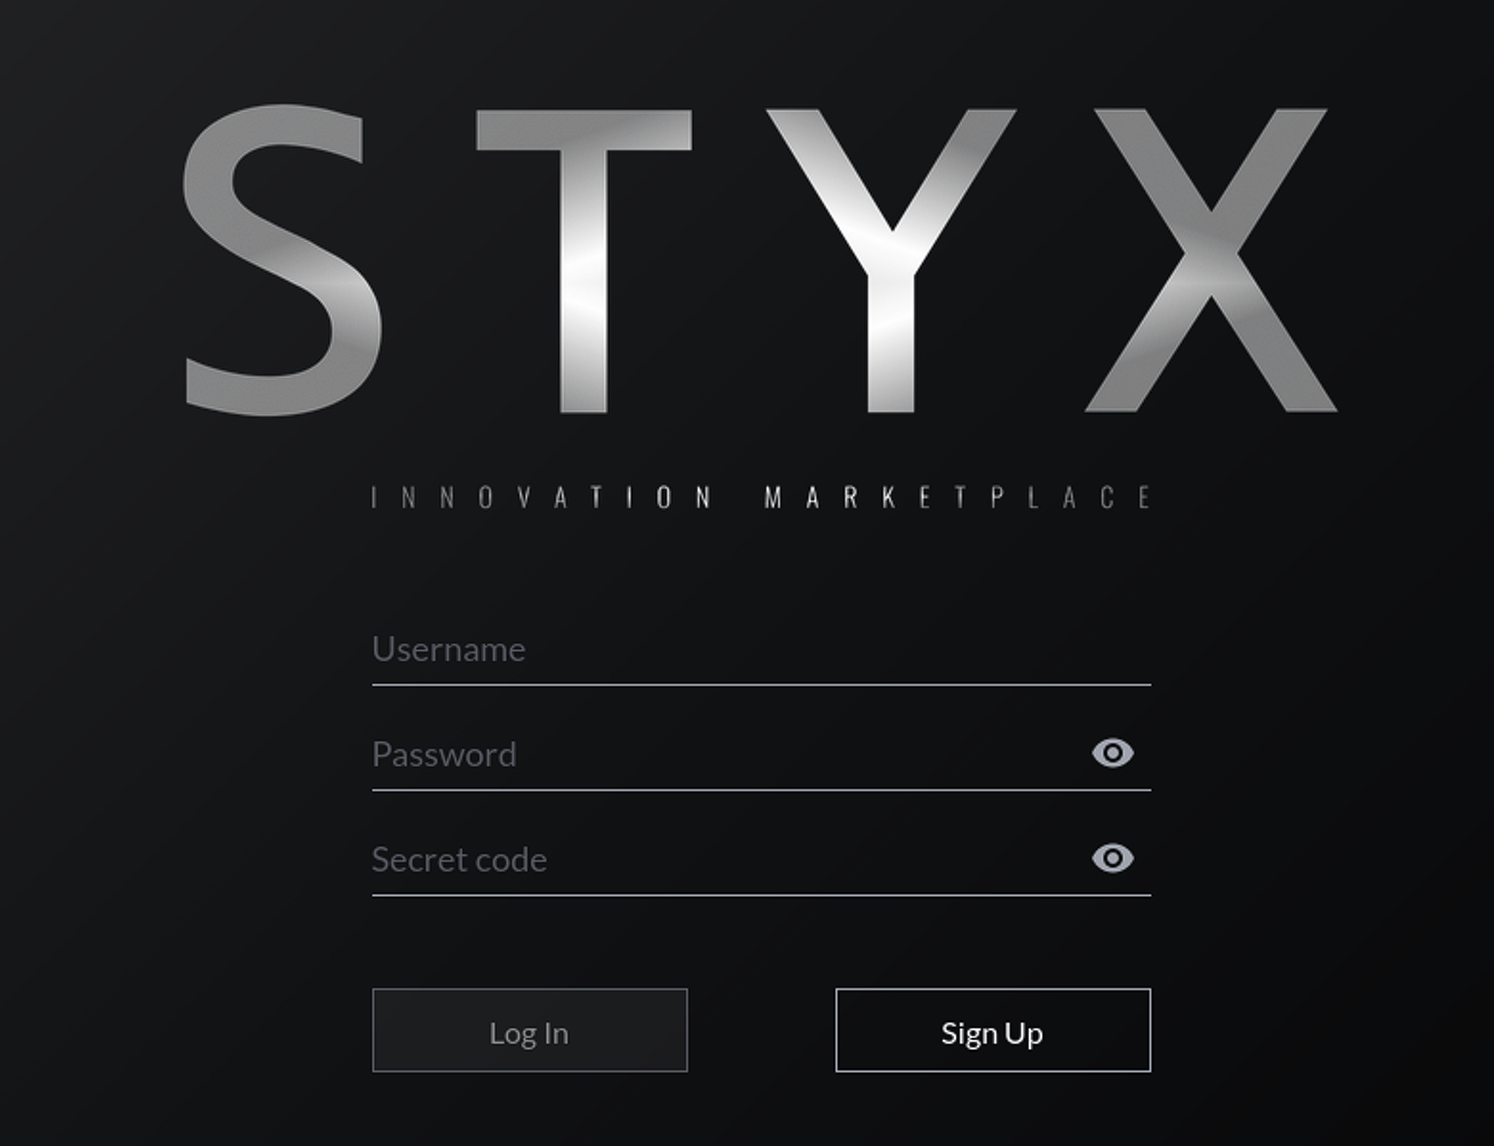 styx dark web marketplace fraud financial data dump sim card ddos 2fa bypass fake id stolen documents banking malware